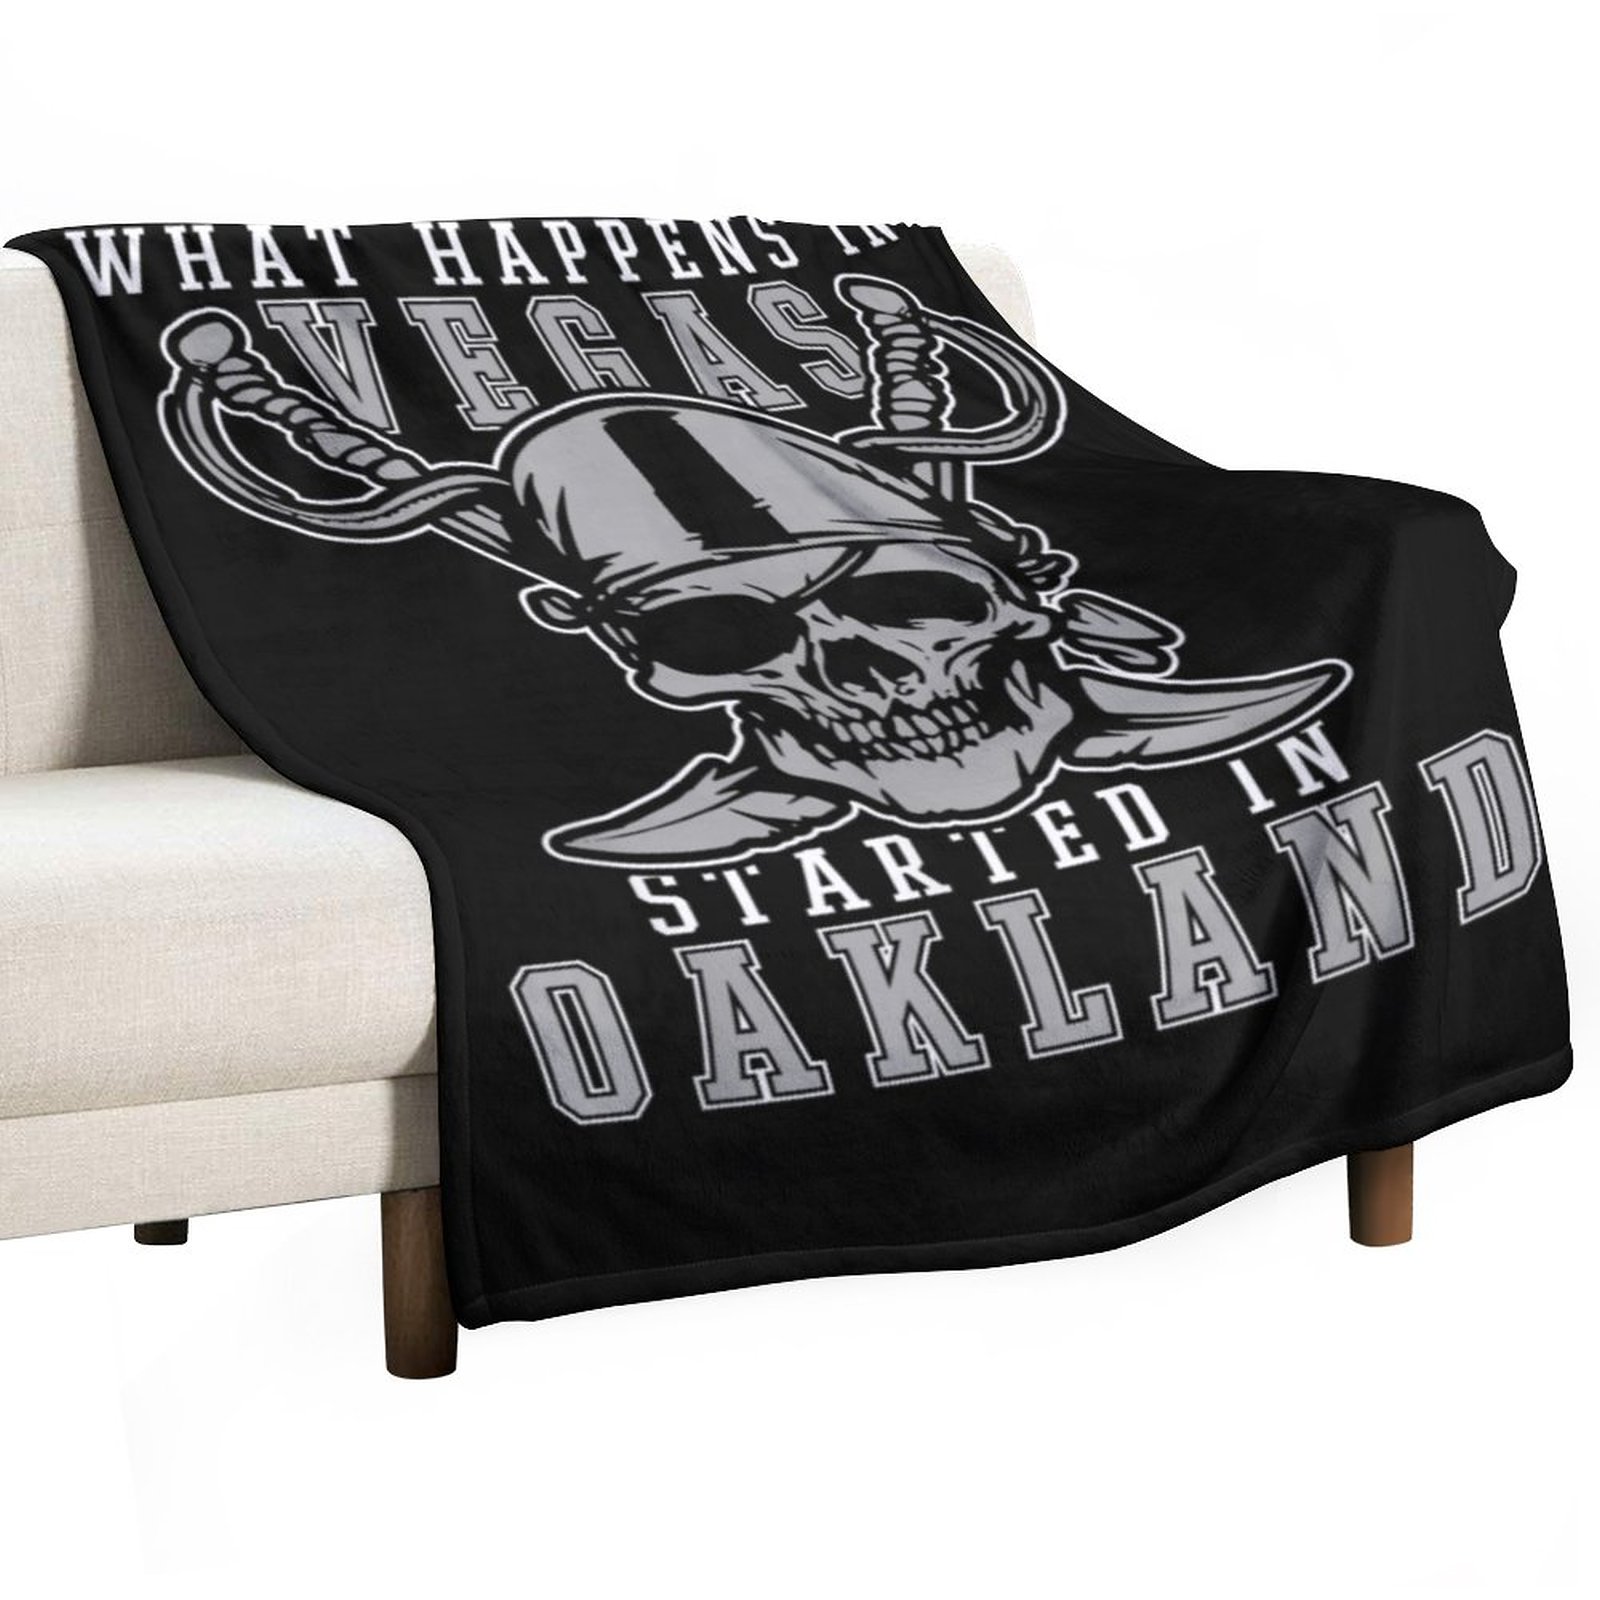 Wat er in Vegas gebeurt, begon in Oakland Football Raider T-shirt gooi dekend algemene luxe merkdeken